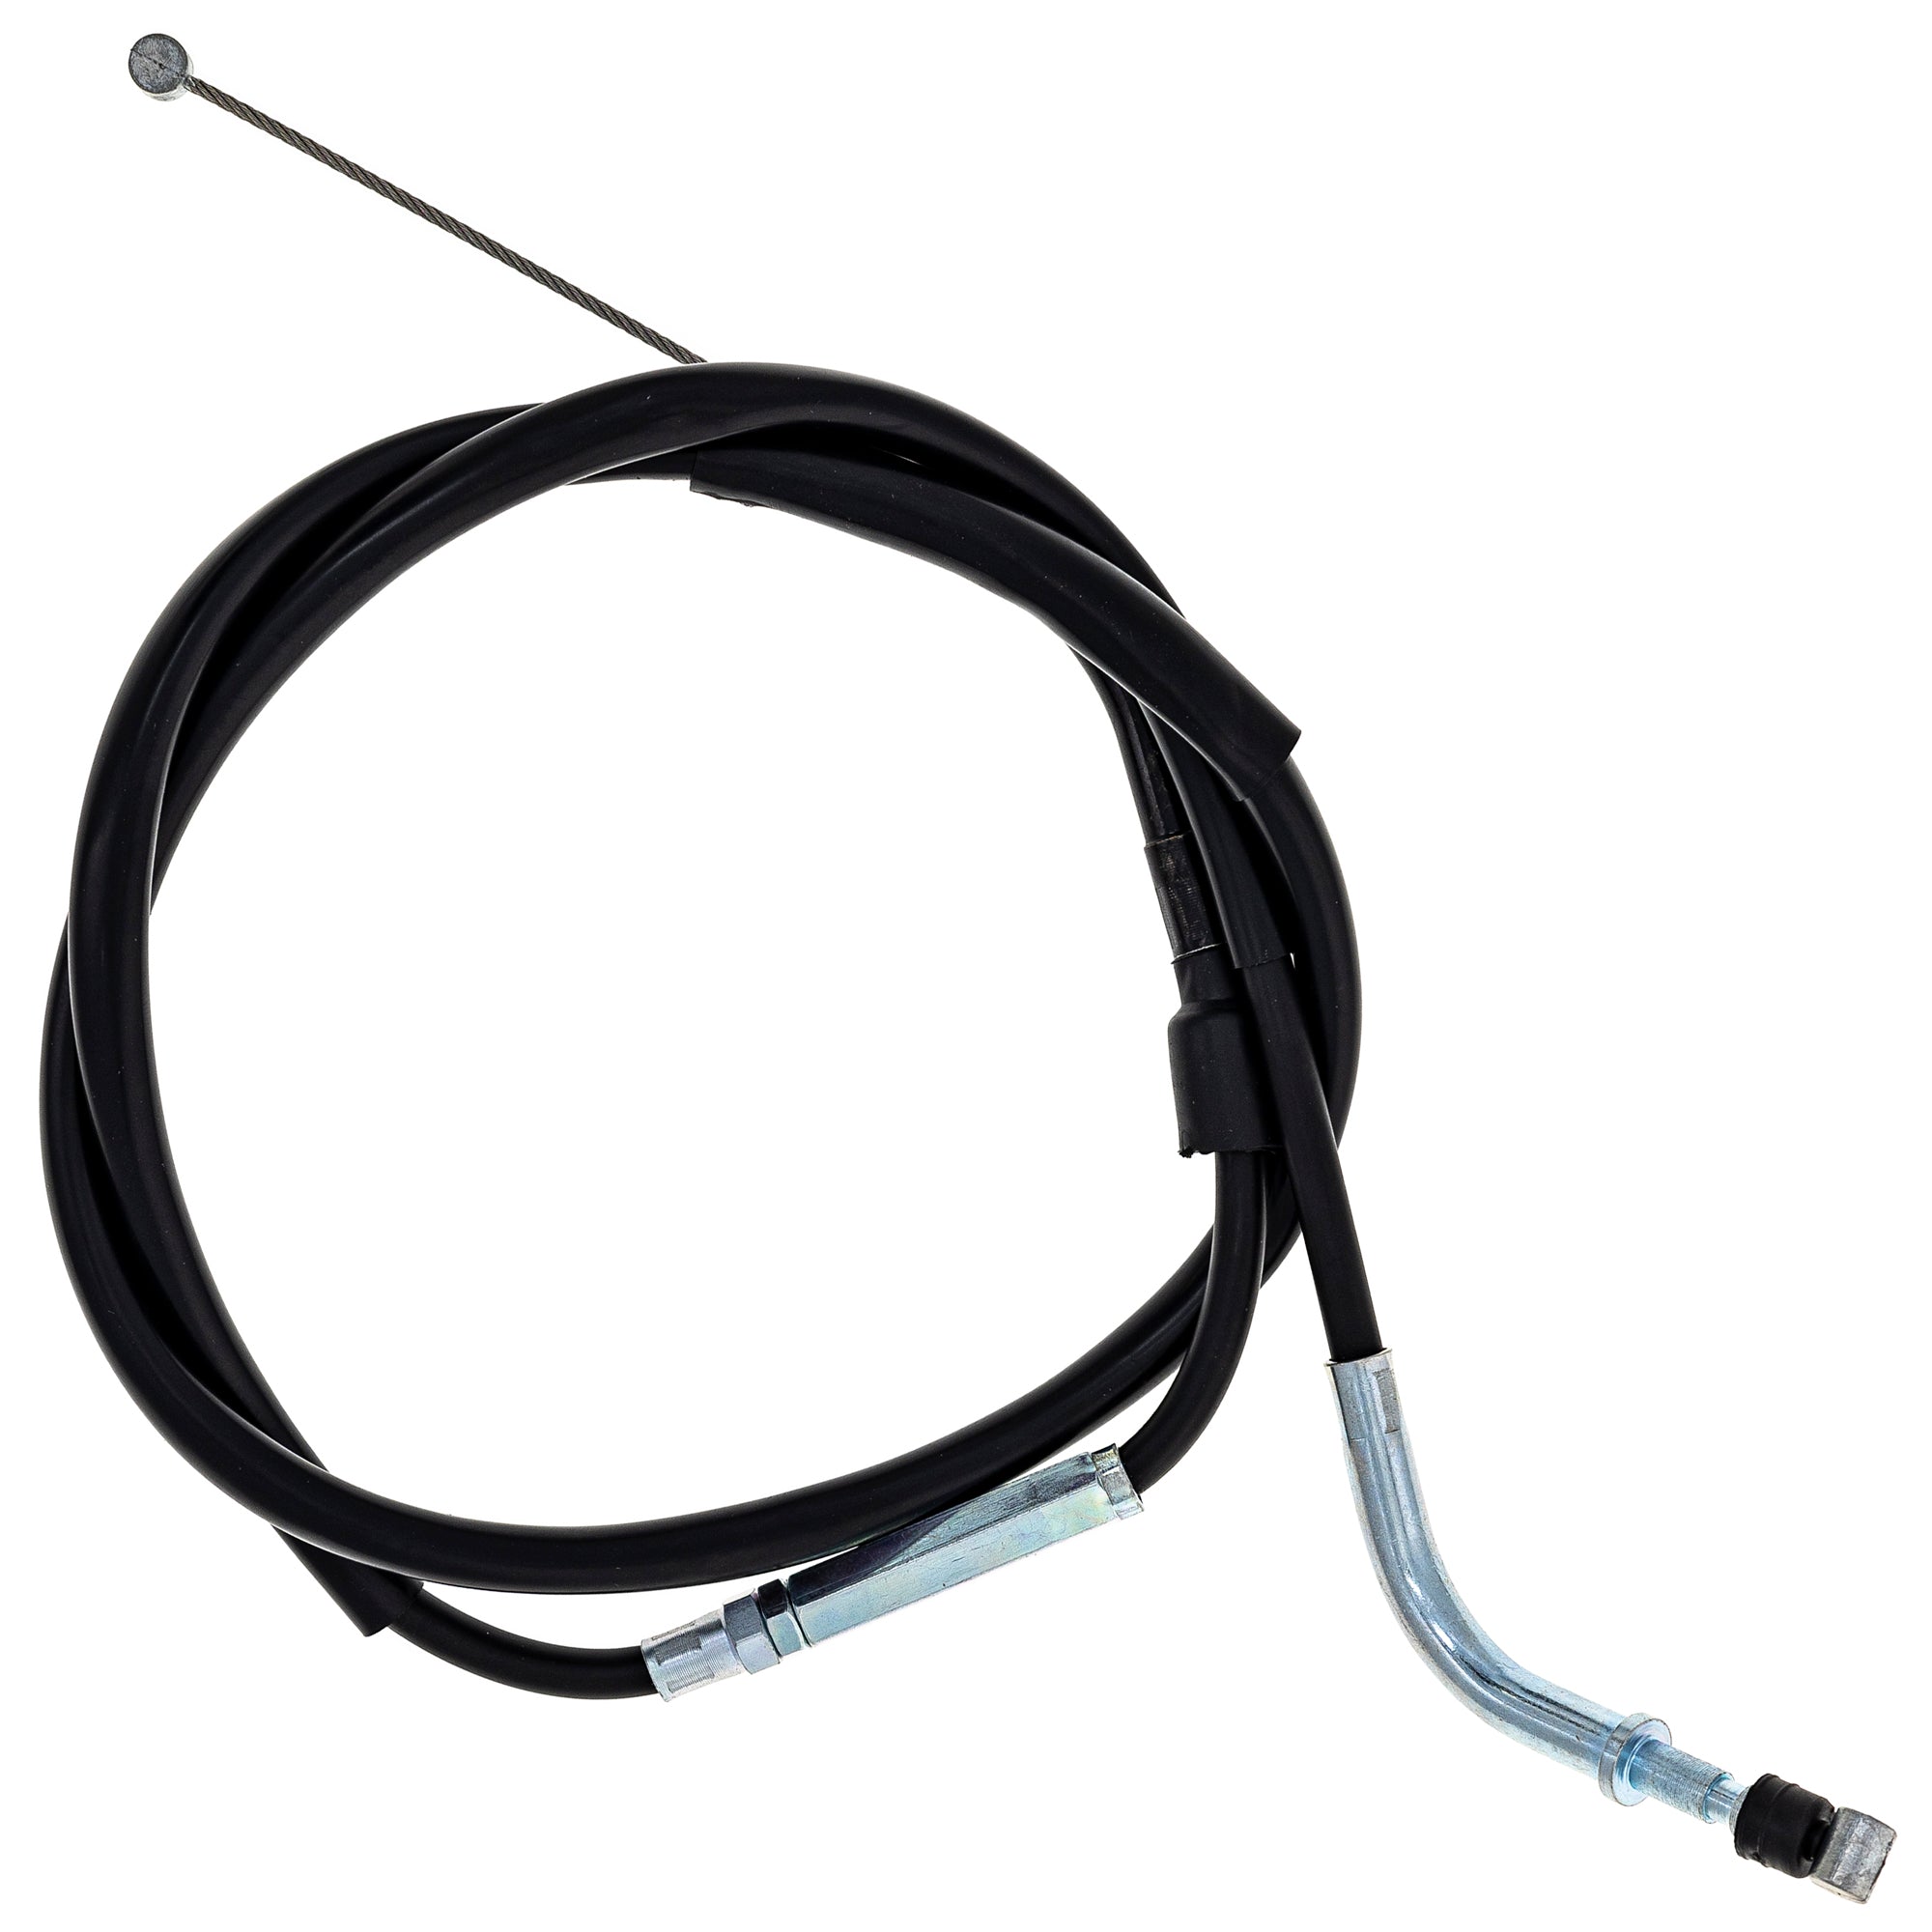 Clutch Cable for zOTHER Arctic Cat Textron Quadsport KFX400 Cat NICHE 519-CCB2343L